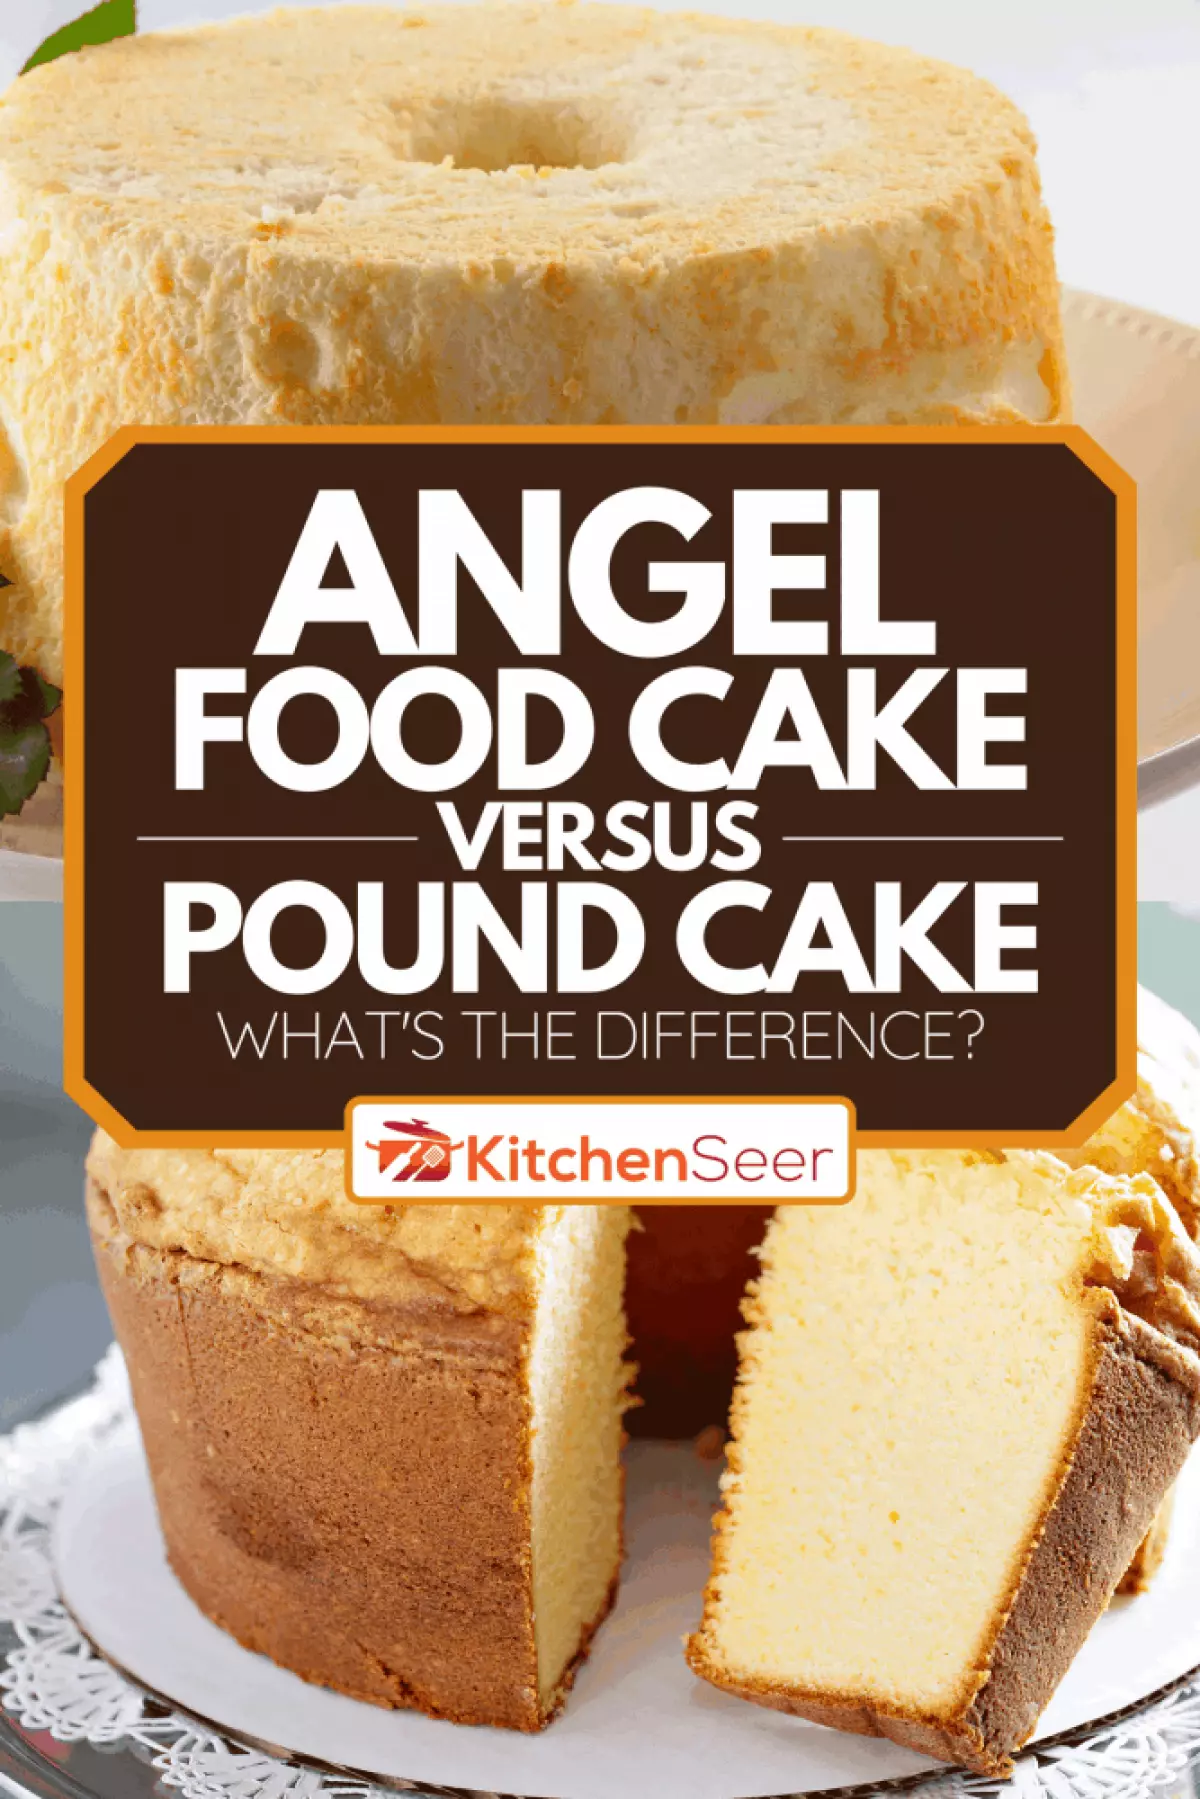 Angel food cake and pound cake comparison